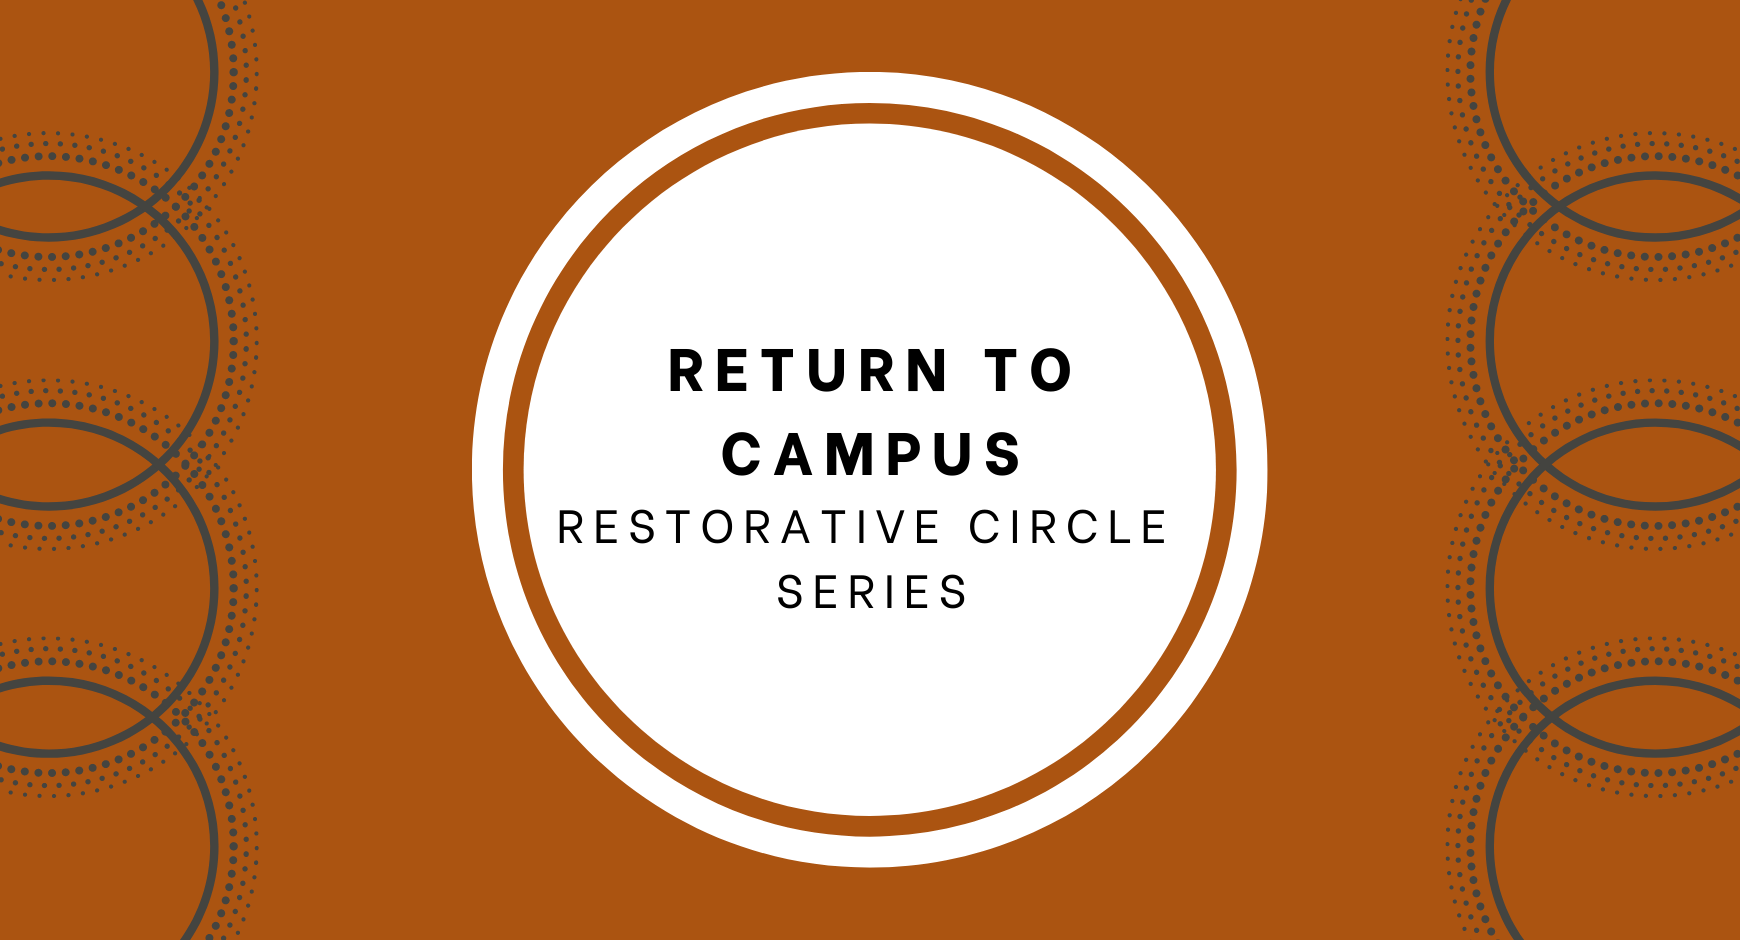 Circle designs under text that reads "Return to Campus Restorative Circle Series"